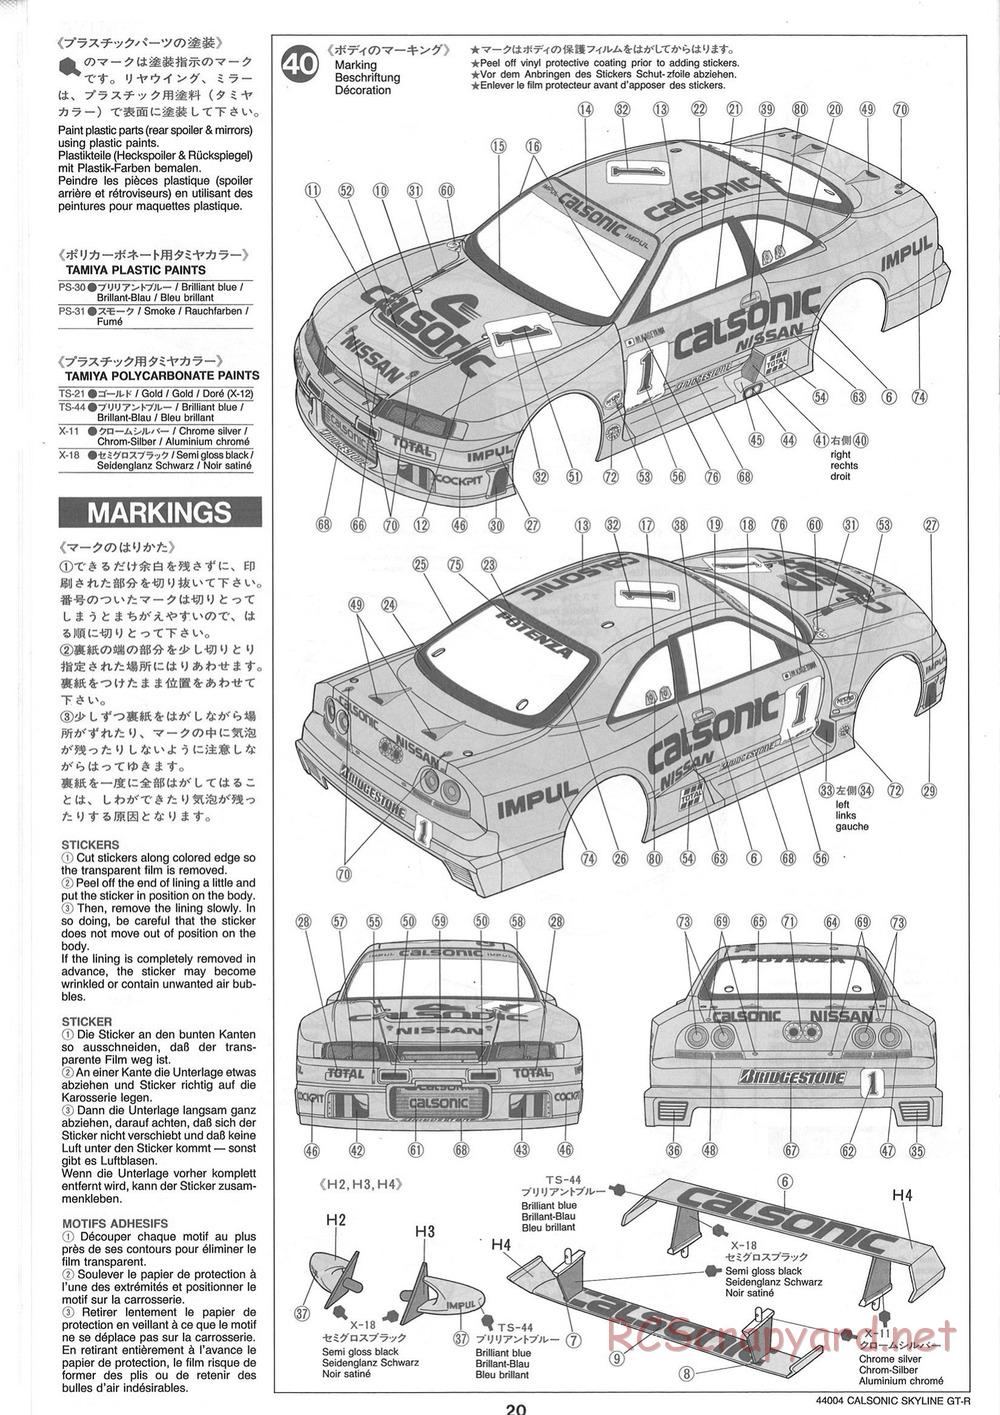 Tamiya - Calsonic GT-R - TGX Mk.1 Chassis - Manual - Page 20